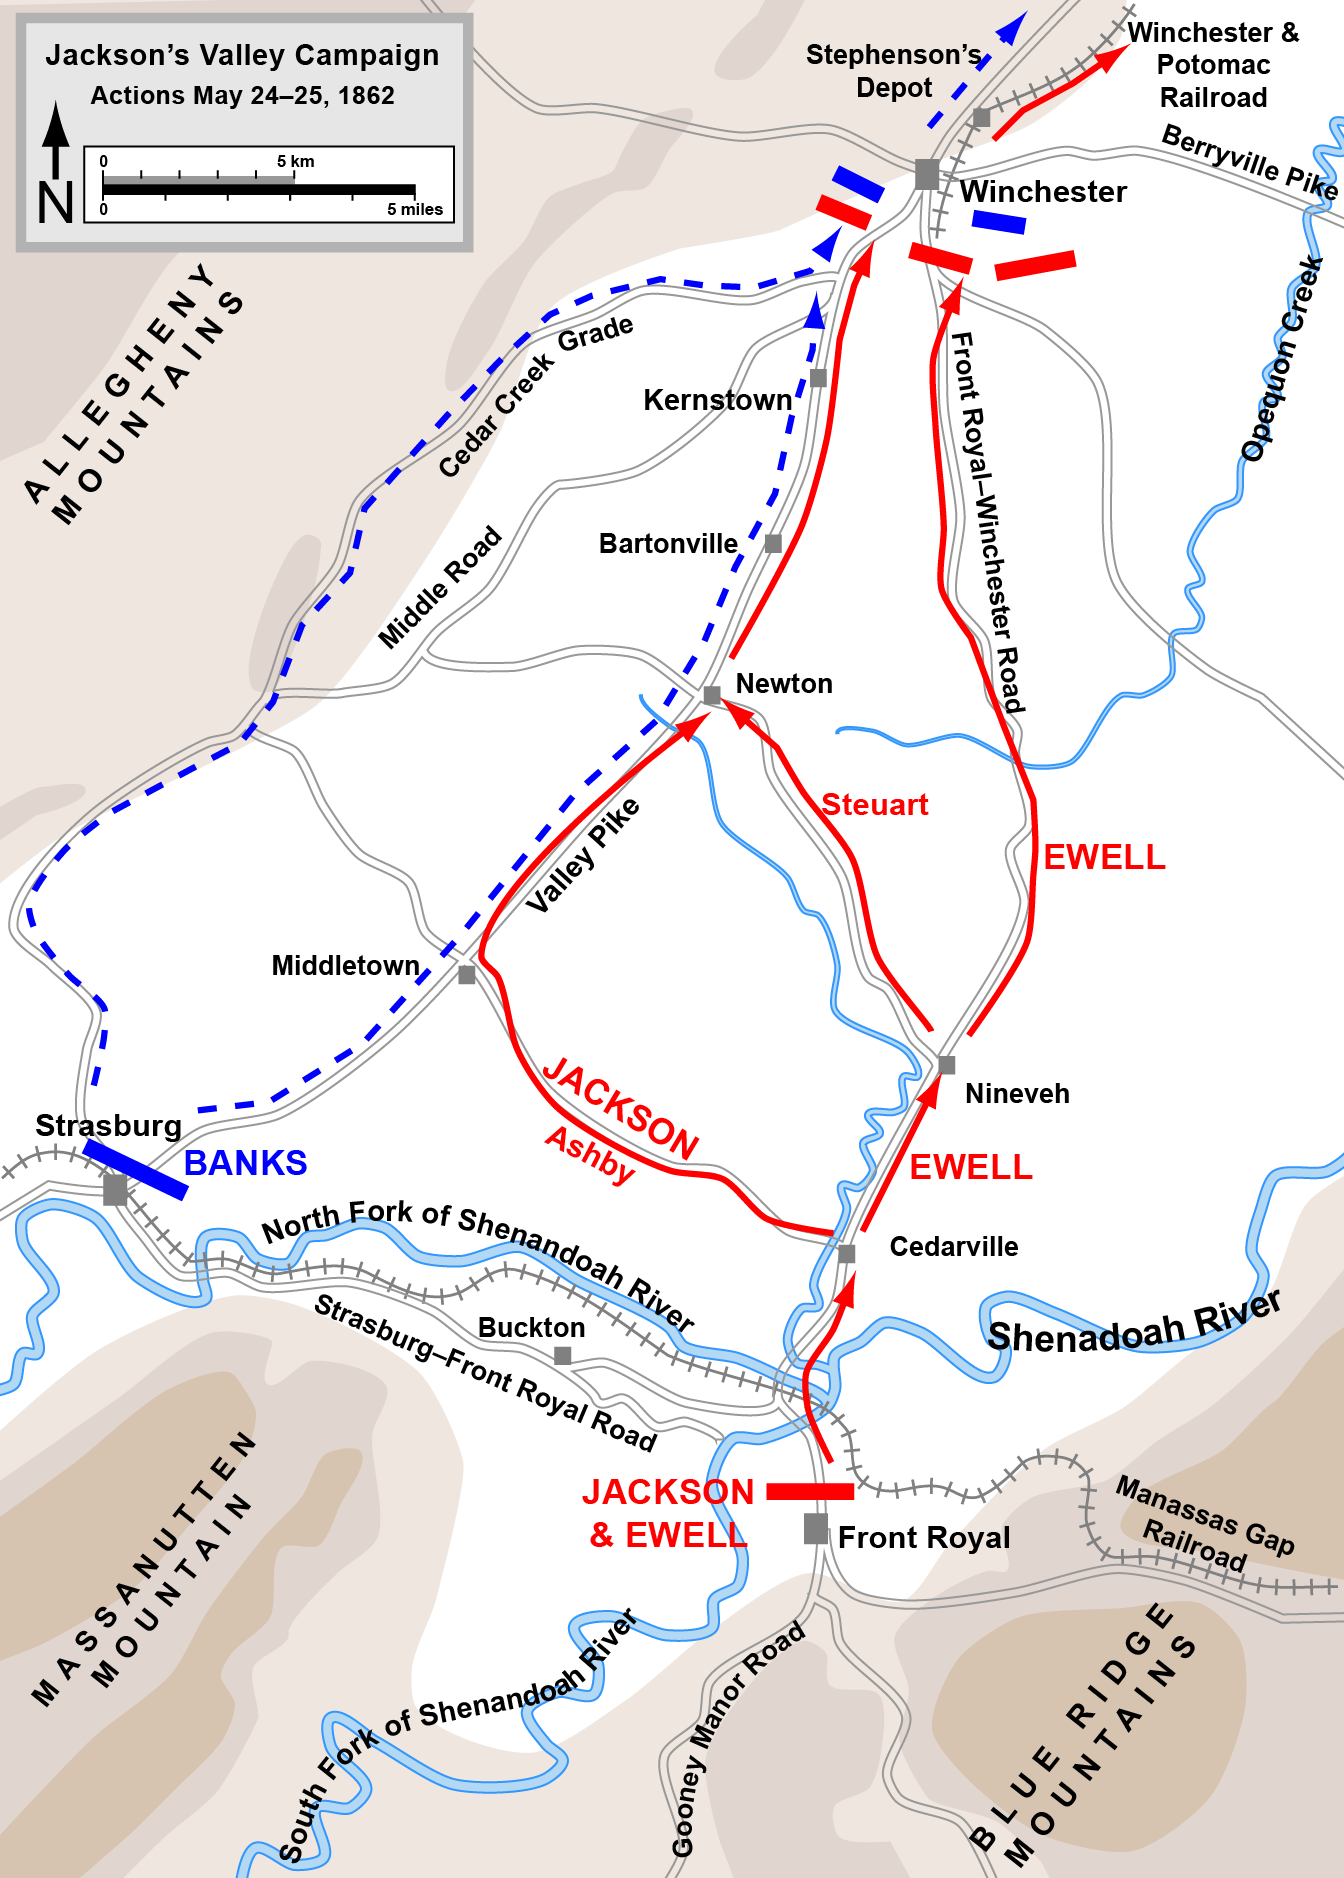 A map shows army movements through Virginia during the Civil War.